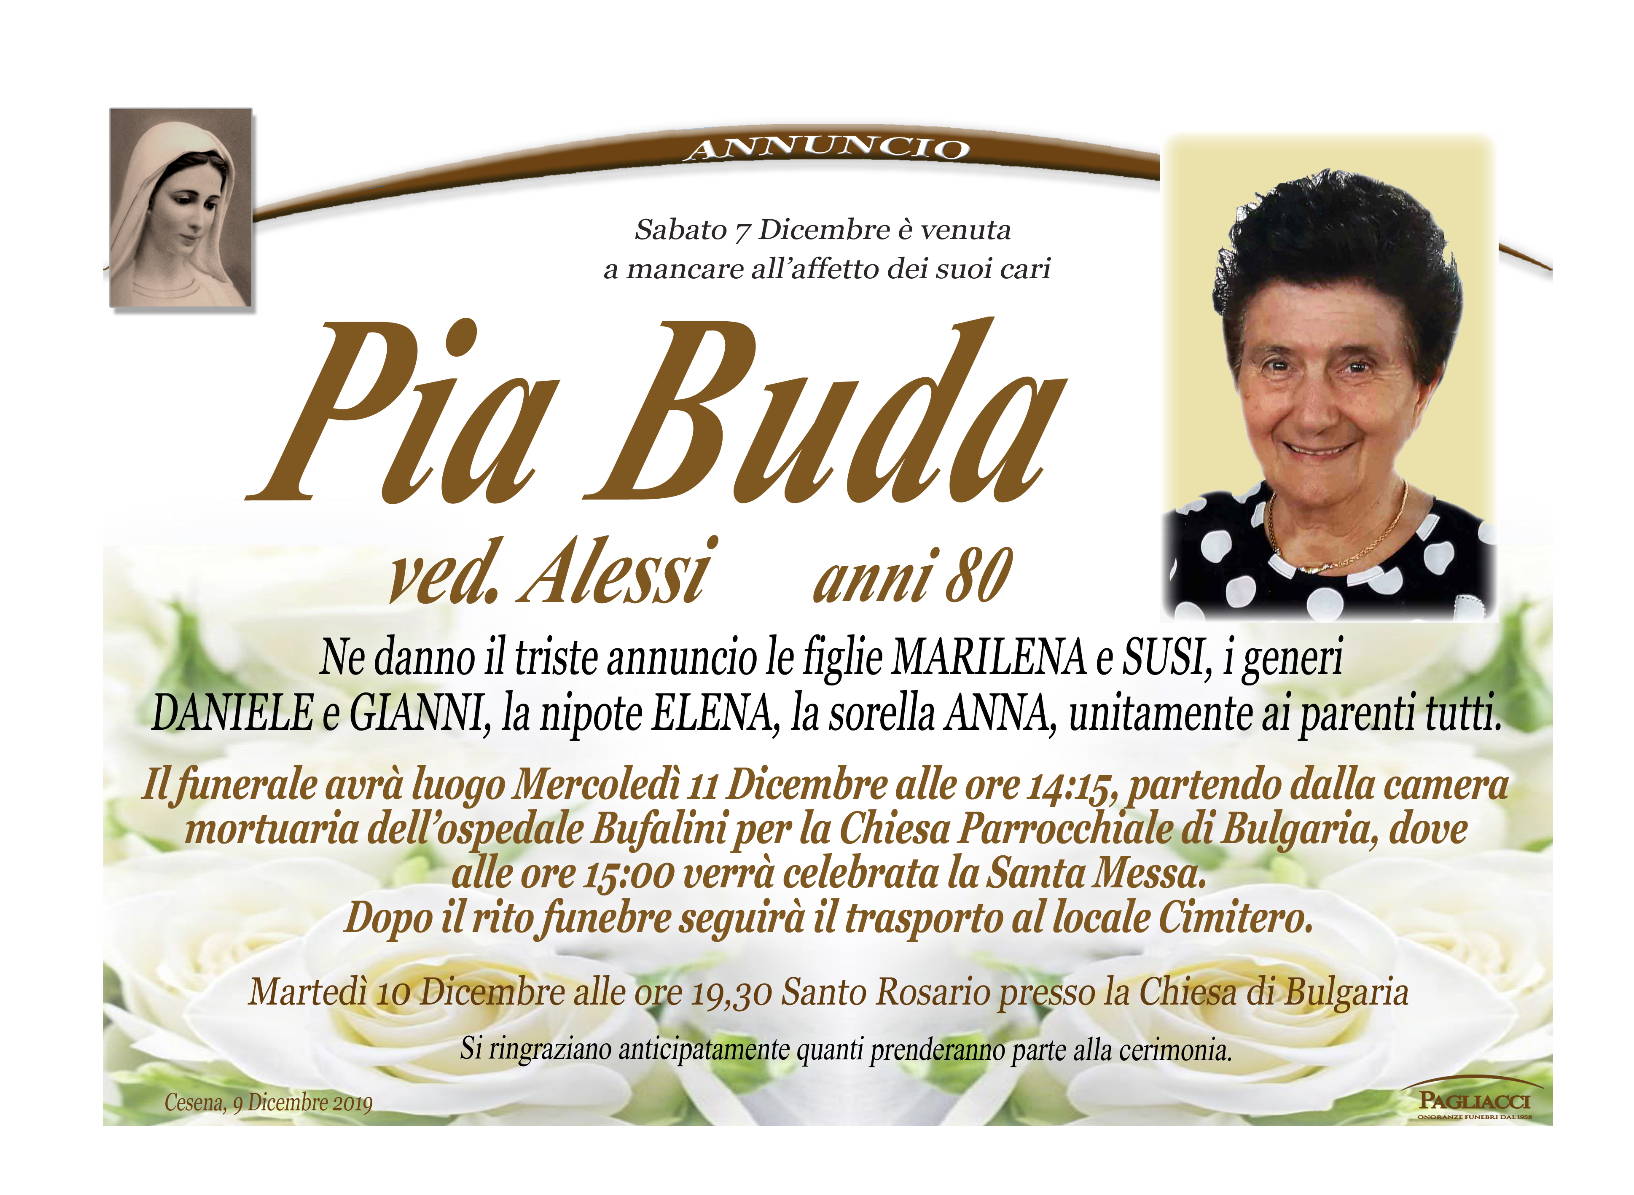 Pia Buda